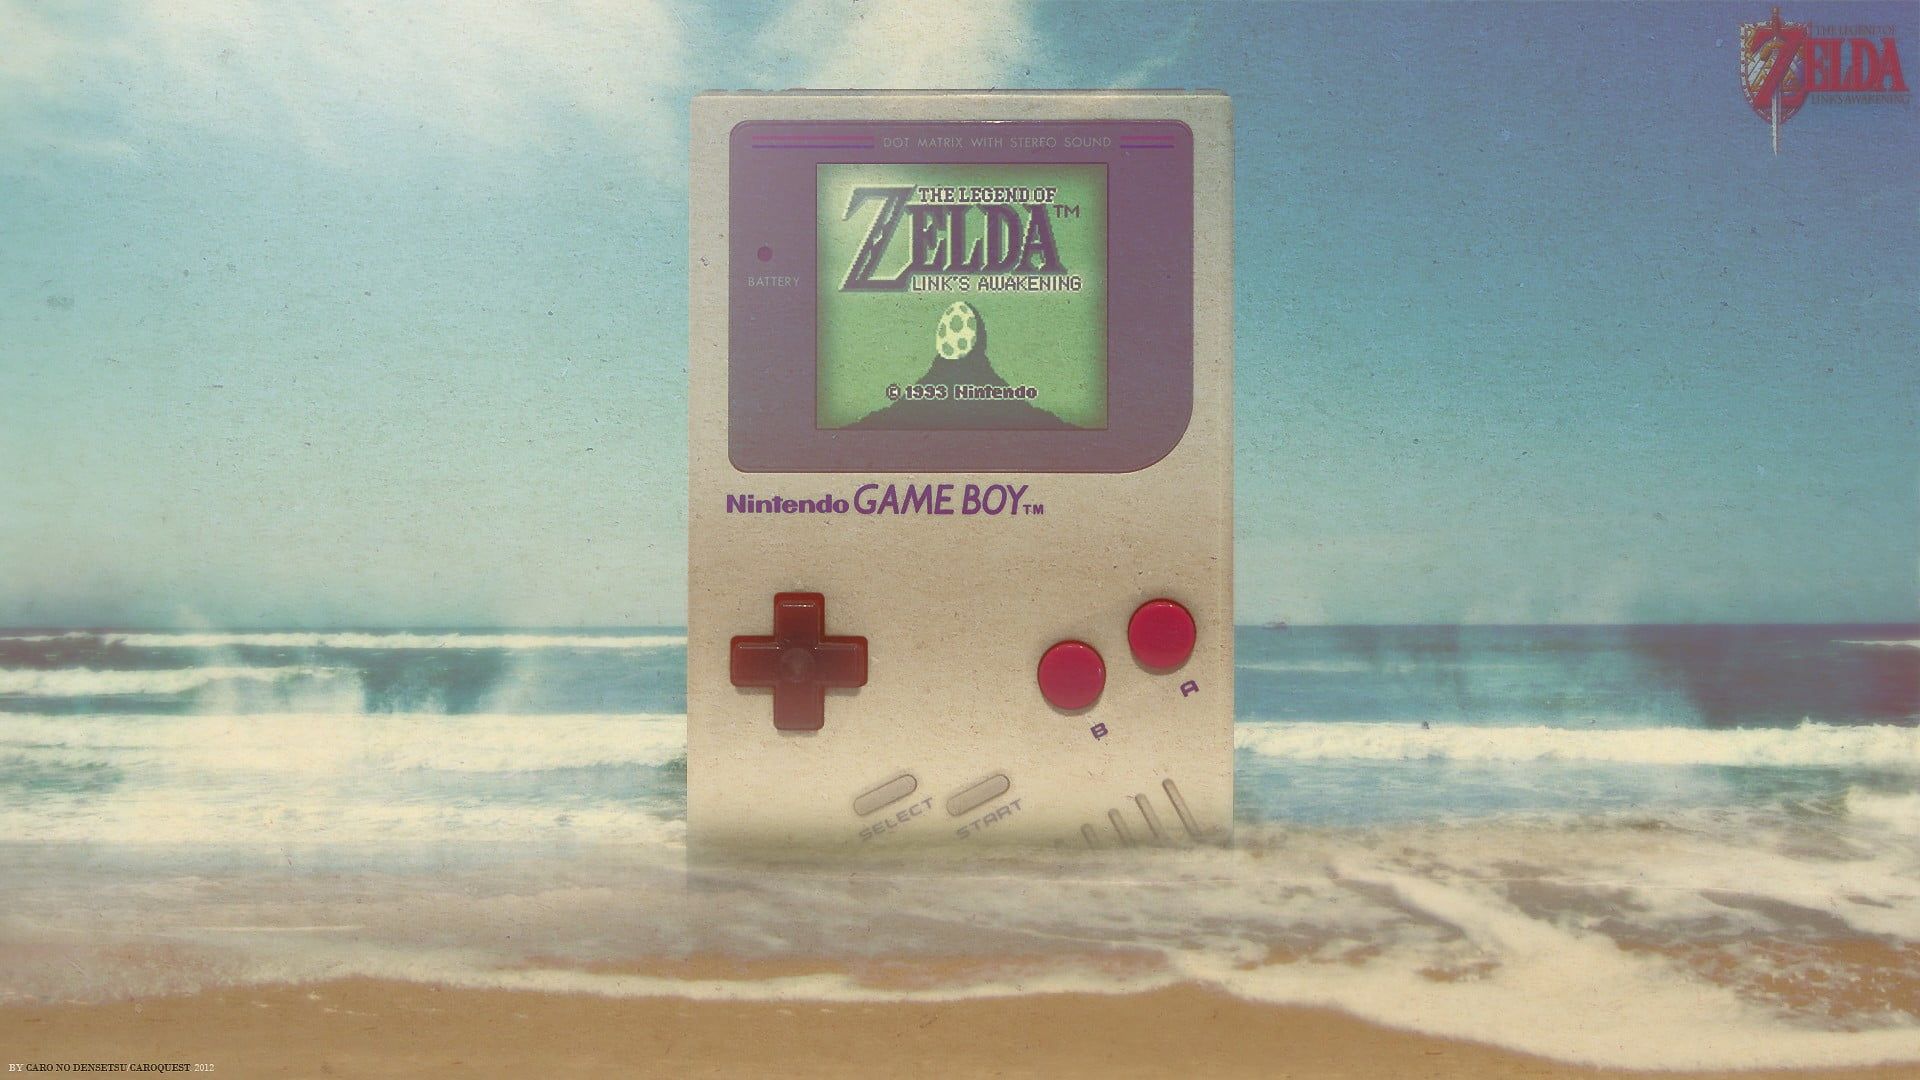 gray Nintendo Game Boy showing The Legend of Zelda game #GameBoy The Legend of Zelda The Legend of Zelda: Link's Awakening. Gameboy, Gaming wallpaper, Nintendo